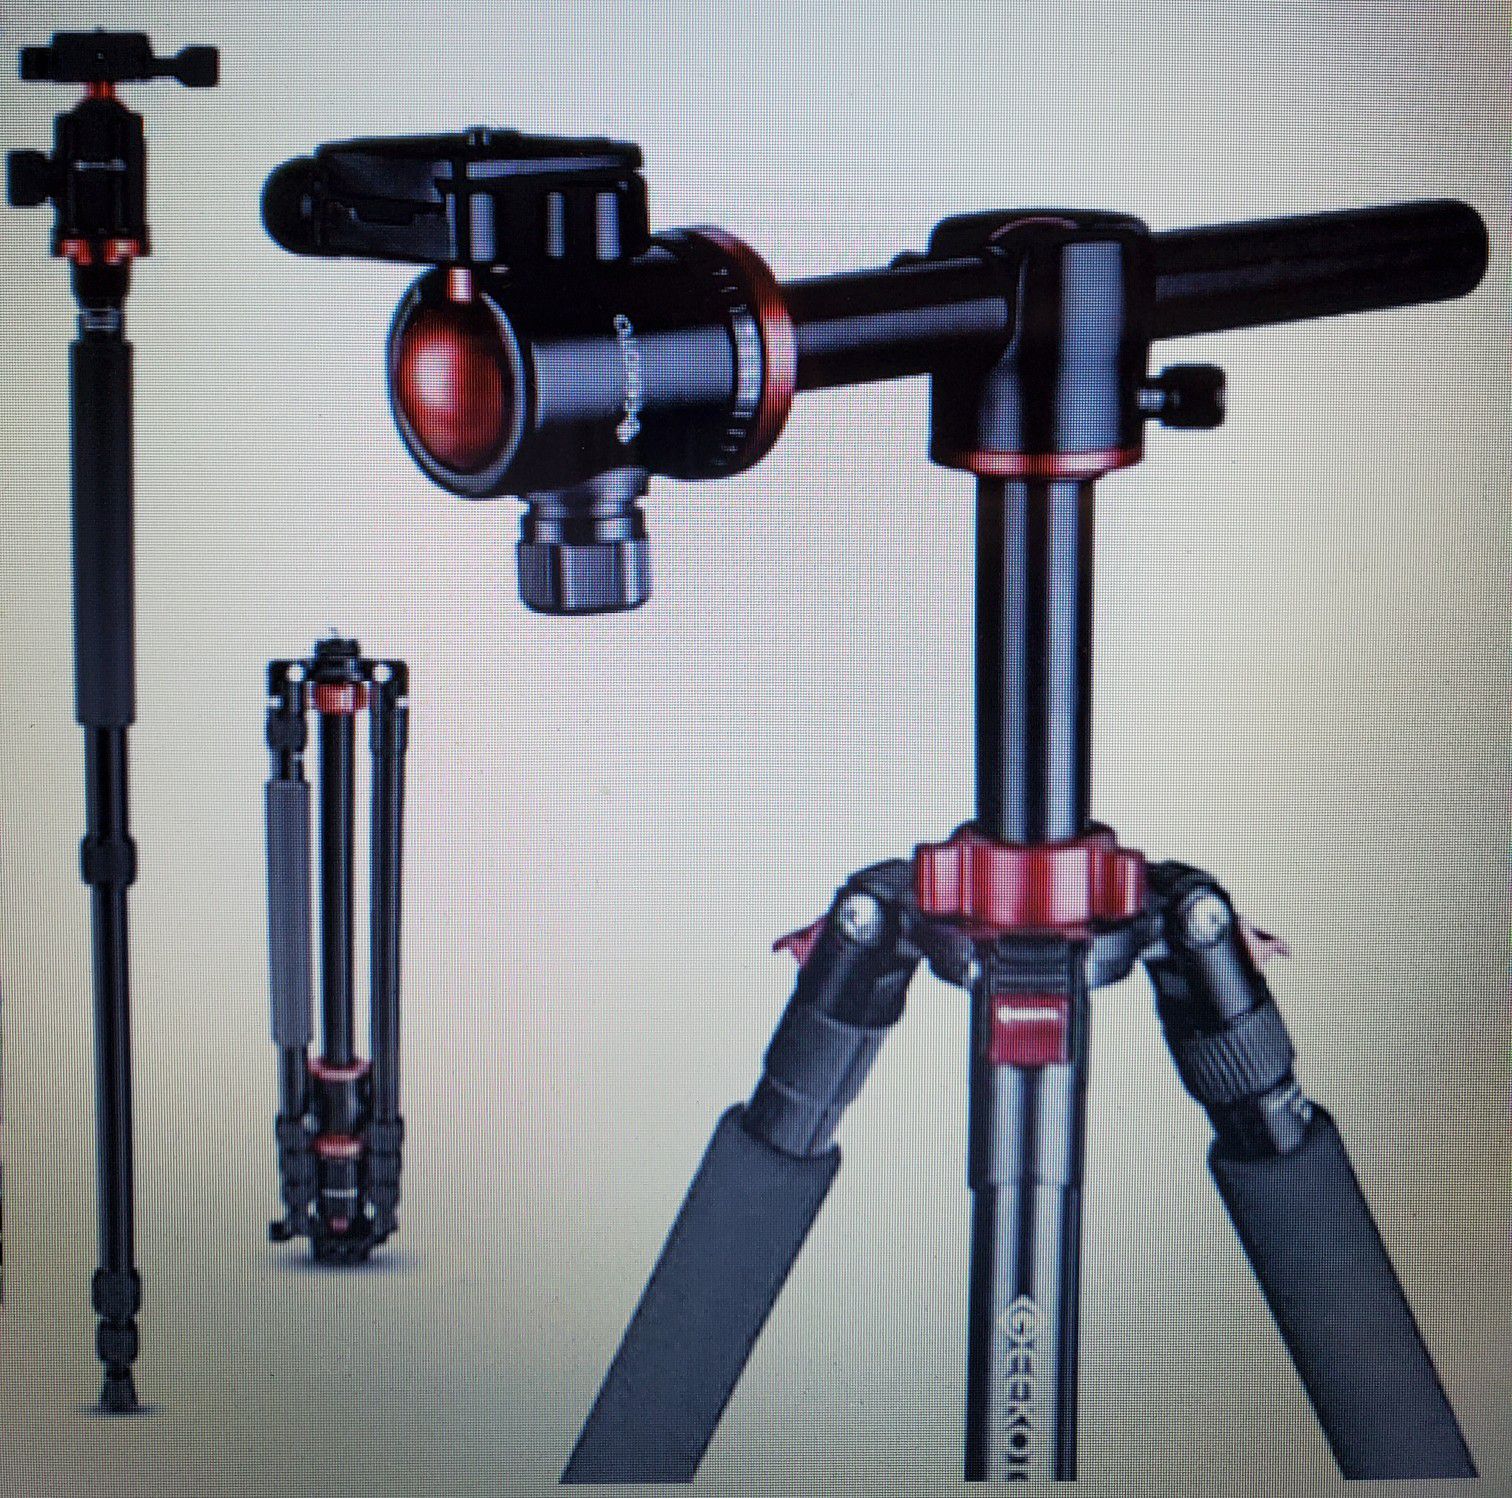 GEEKOTO Camera Tripod for Cannon Nikon & Sony DSLR Cameras